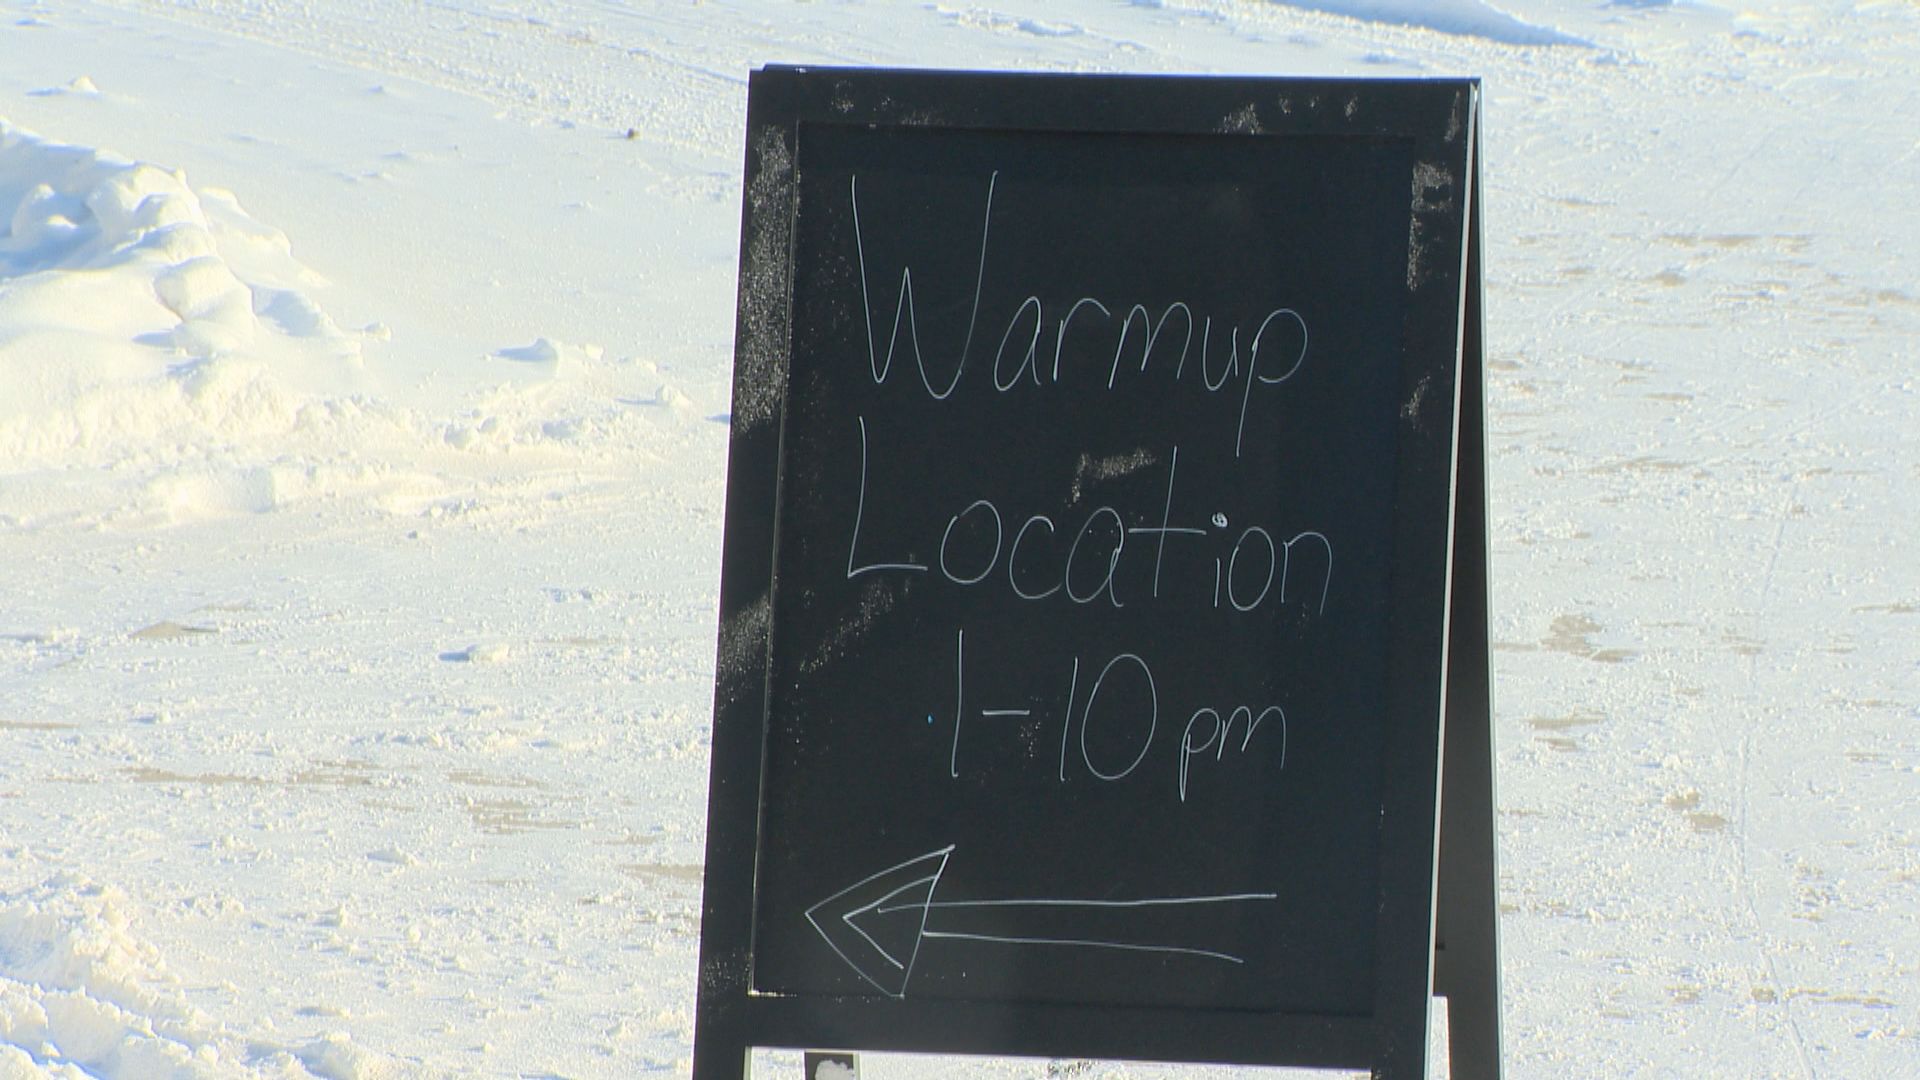 Number of warming centre visitors increasing in Saskatoon